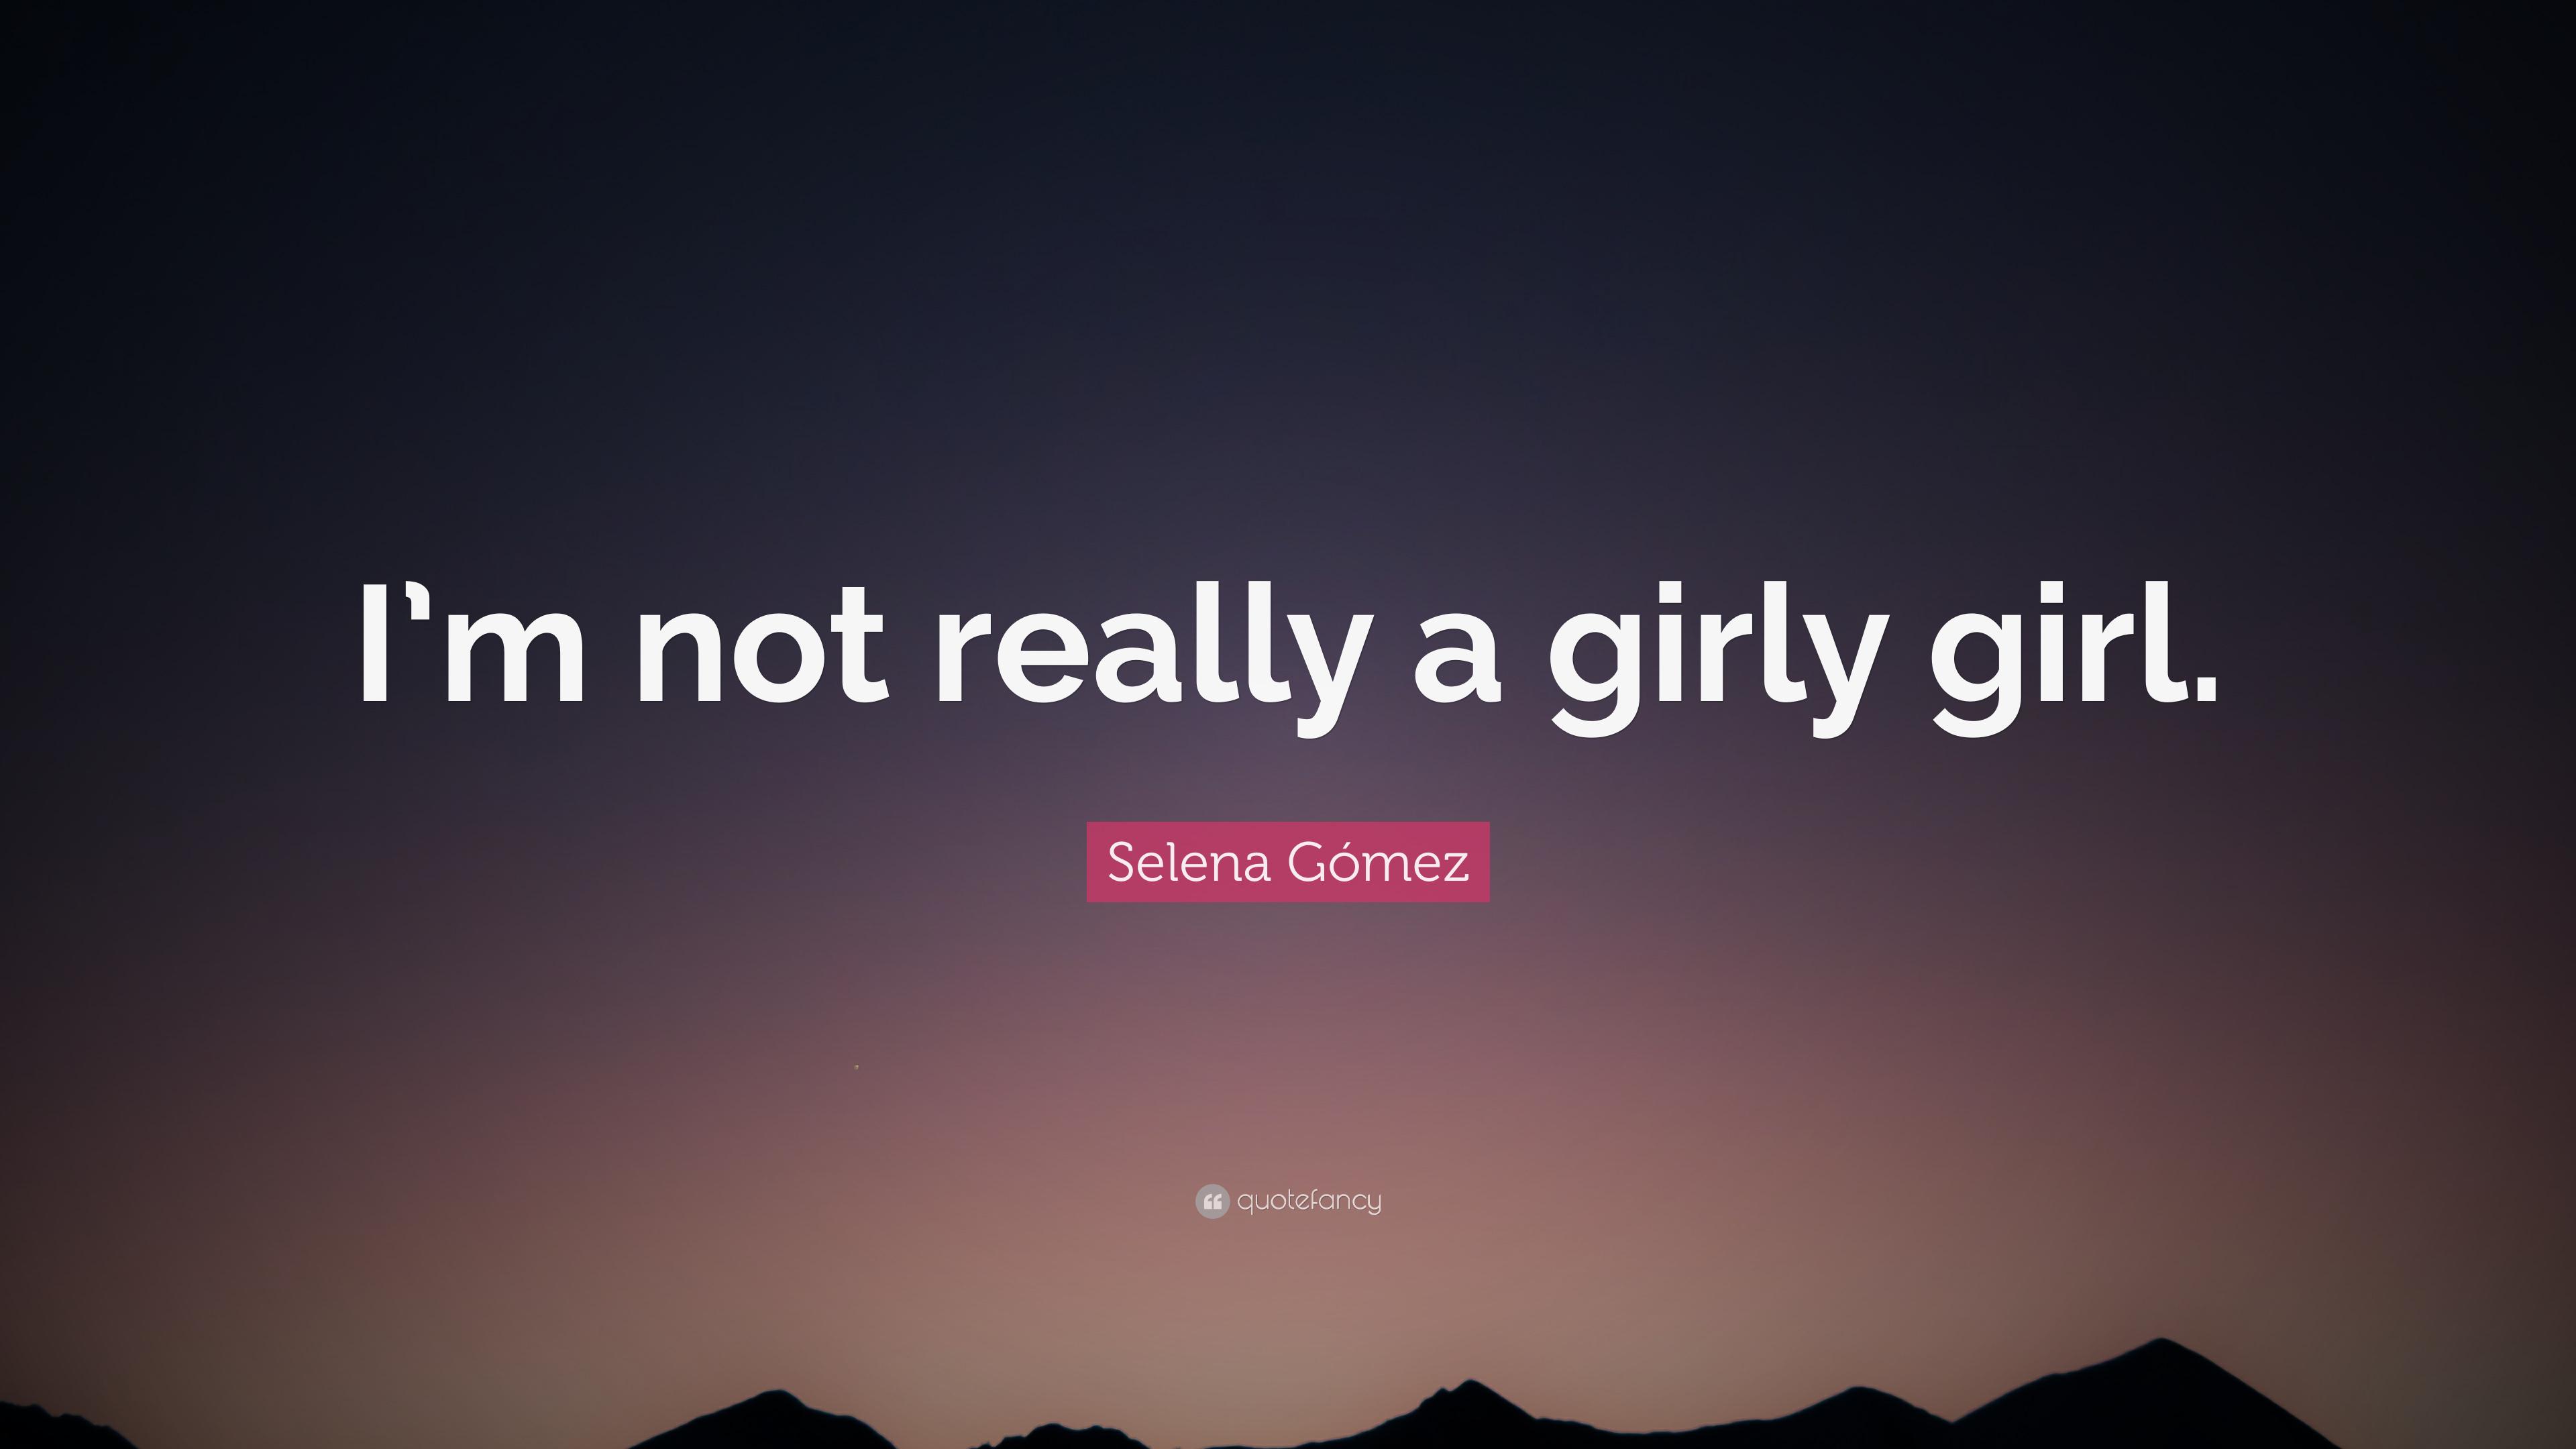 Selena Gómez Quote: “I'm not really a girly girl.” 12